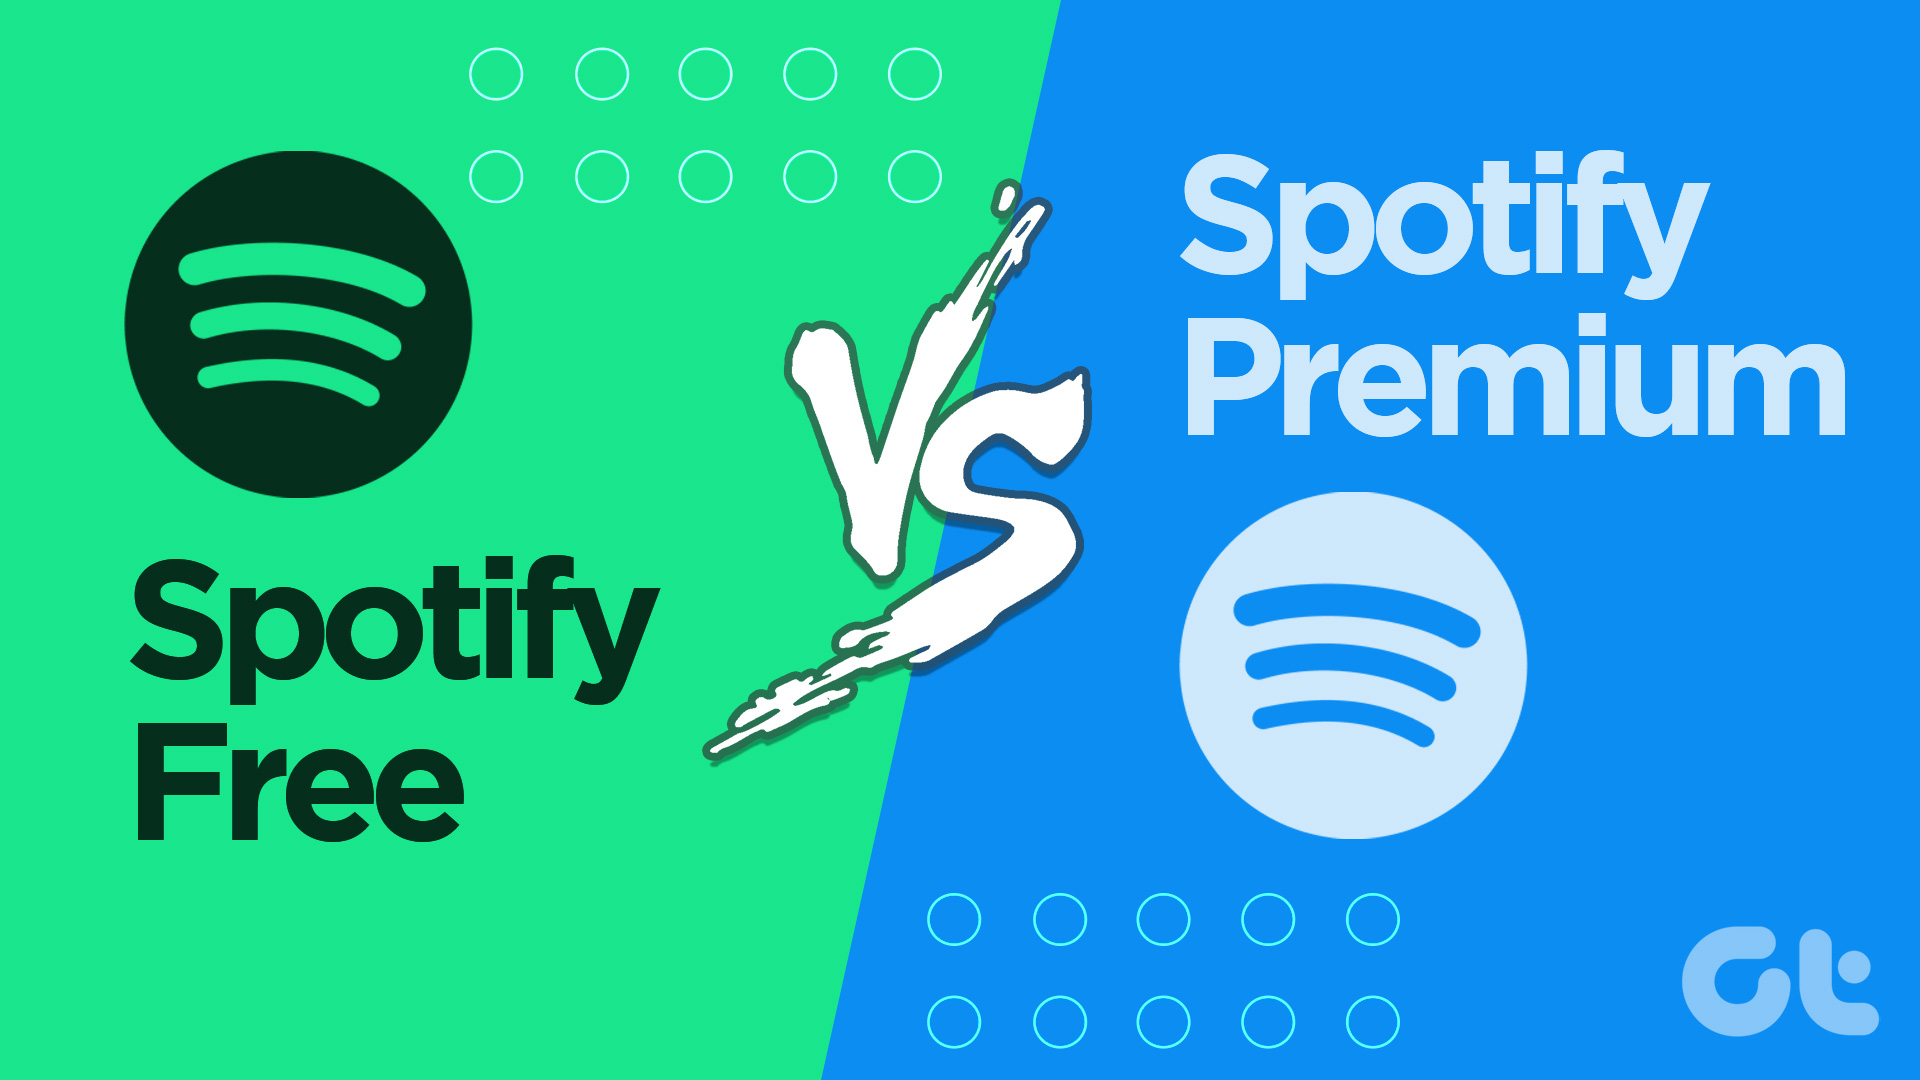 Spotify's Free vs. Premium 